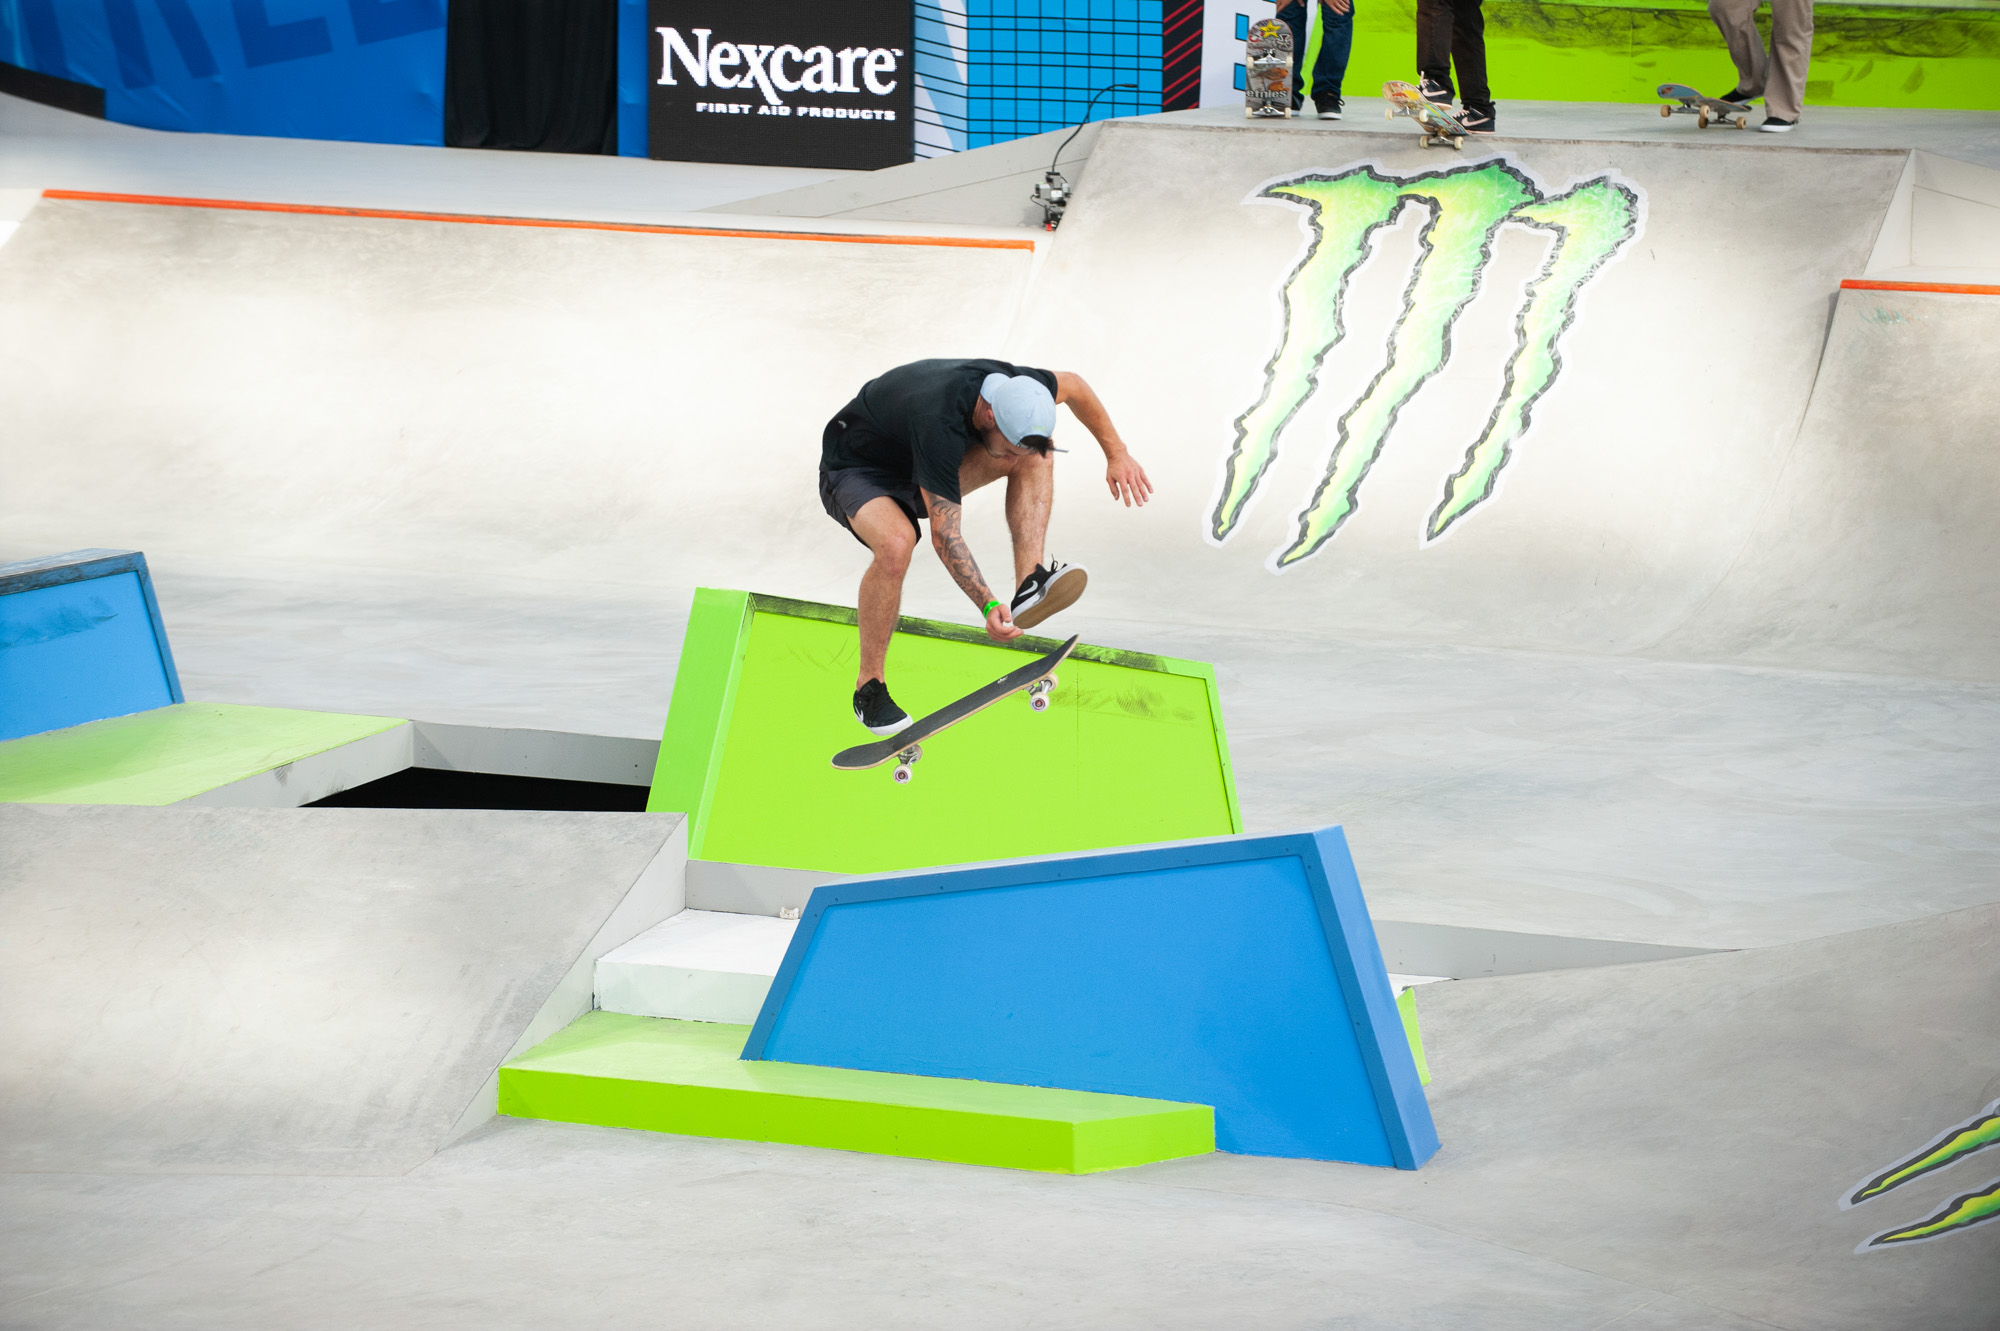 Monster Energy Releases “Aspire – Inspire” Feature on Skateboarder Aurelien Giraud